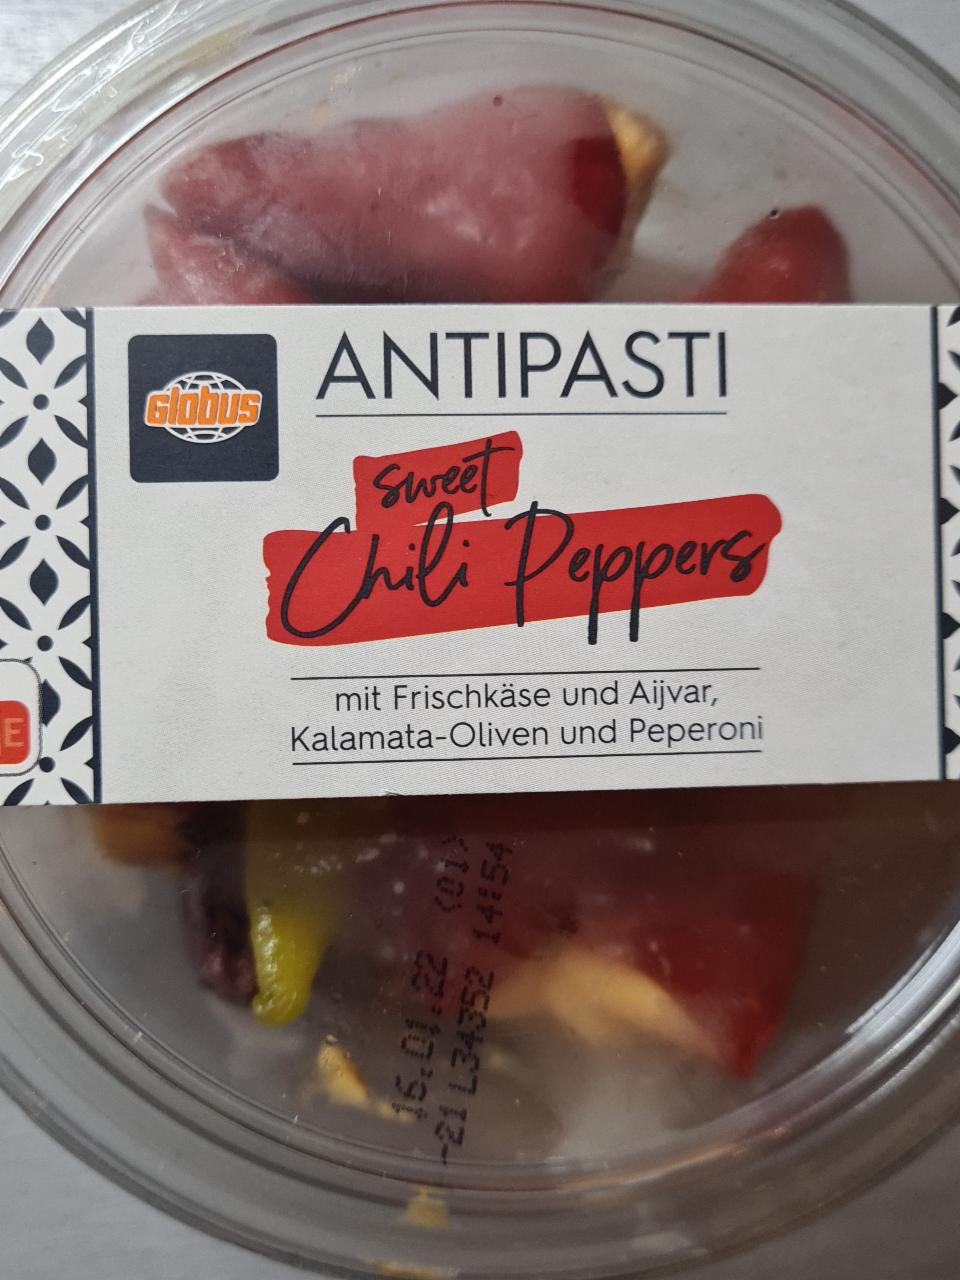 Fotografie - Antipasti Sweet Chili peppers Globus